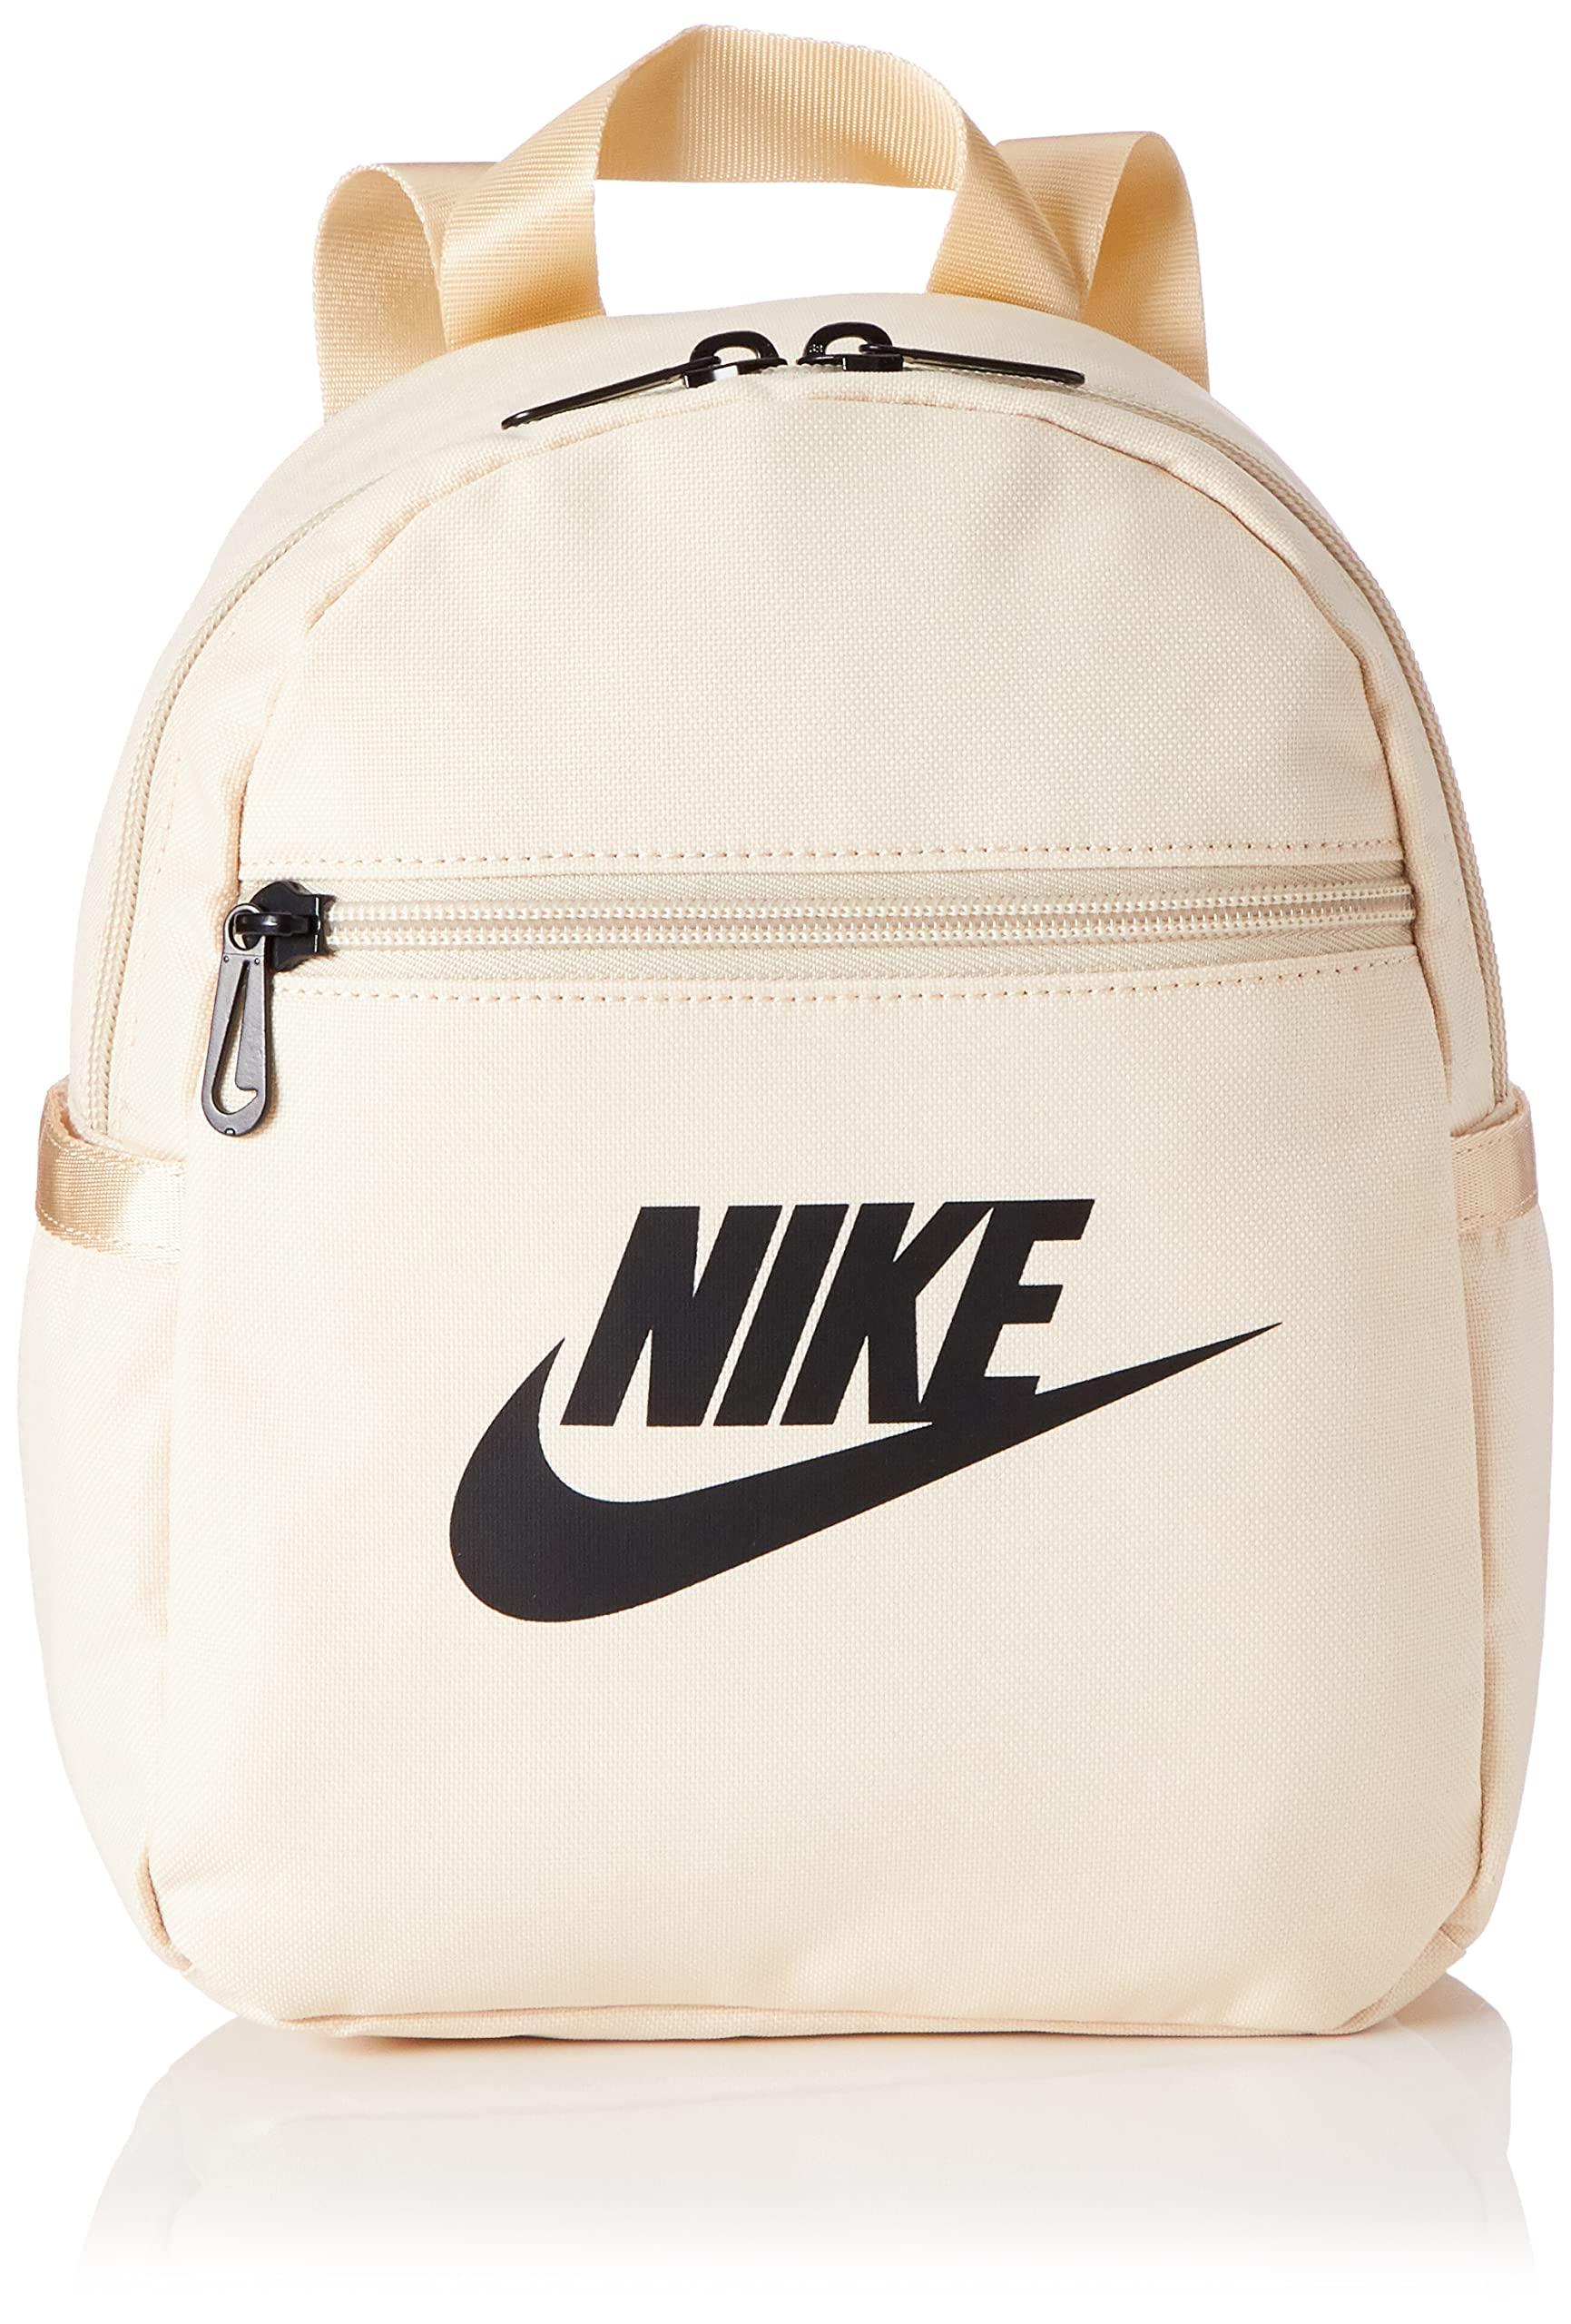 S Backpack CW9301-219 Futura 365 Nike de color Neutro | Lyst